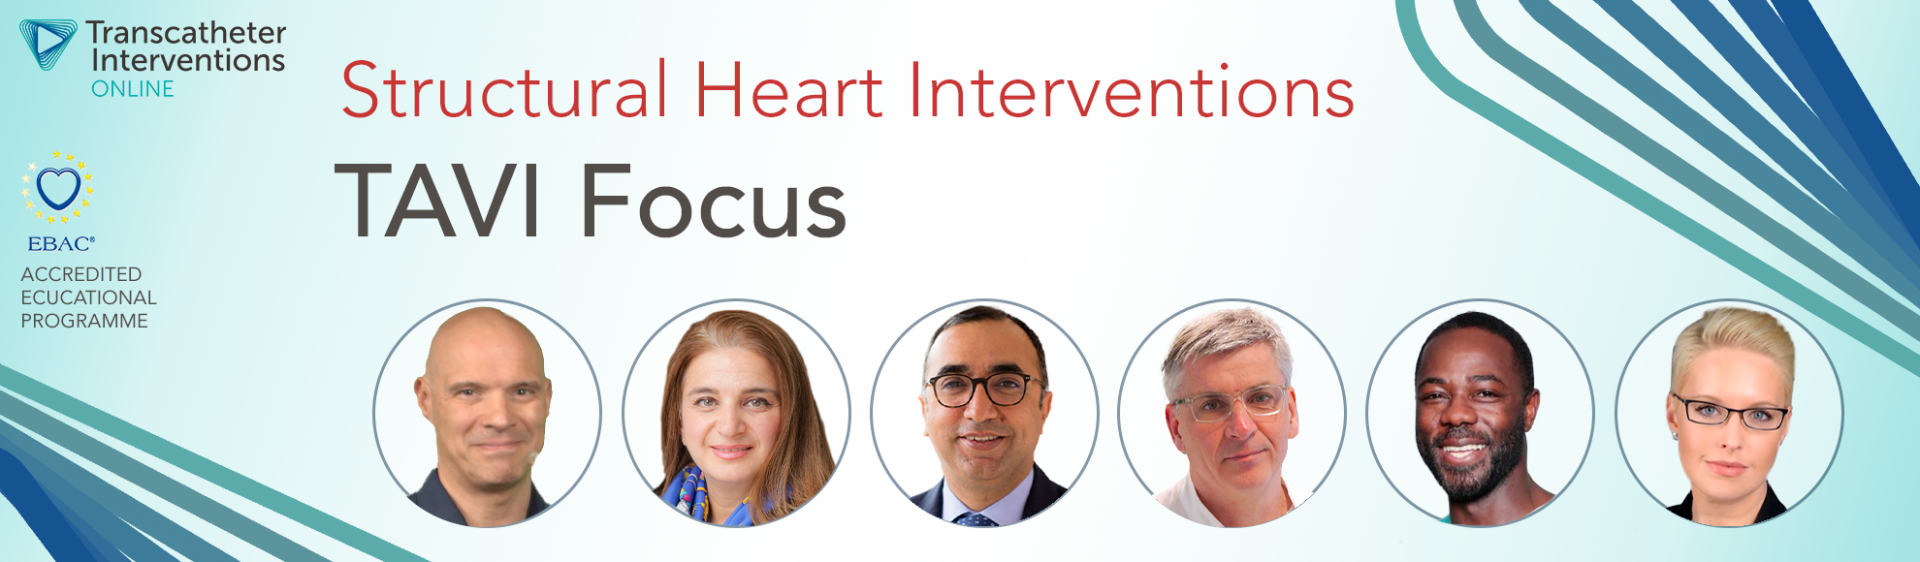 Transcatheter Interventions Online: Structural Heart Interventions: TAVI Focus